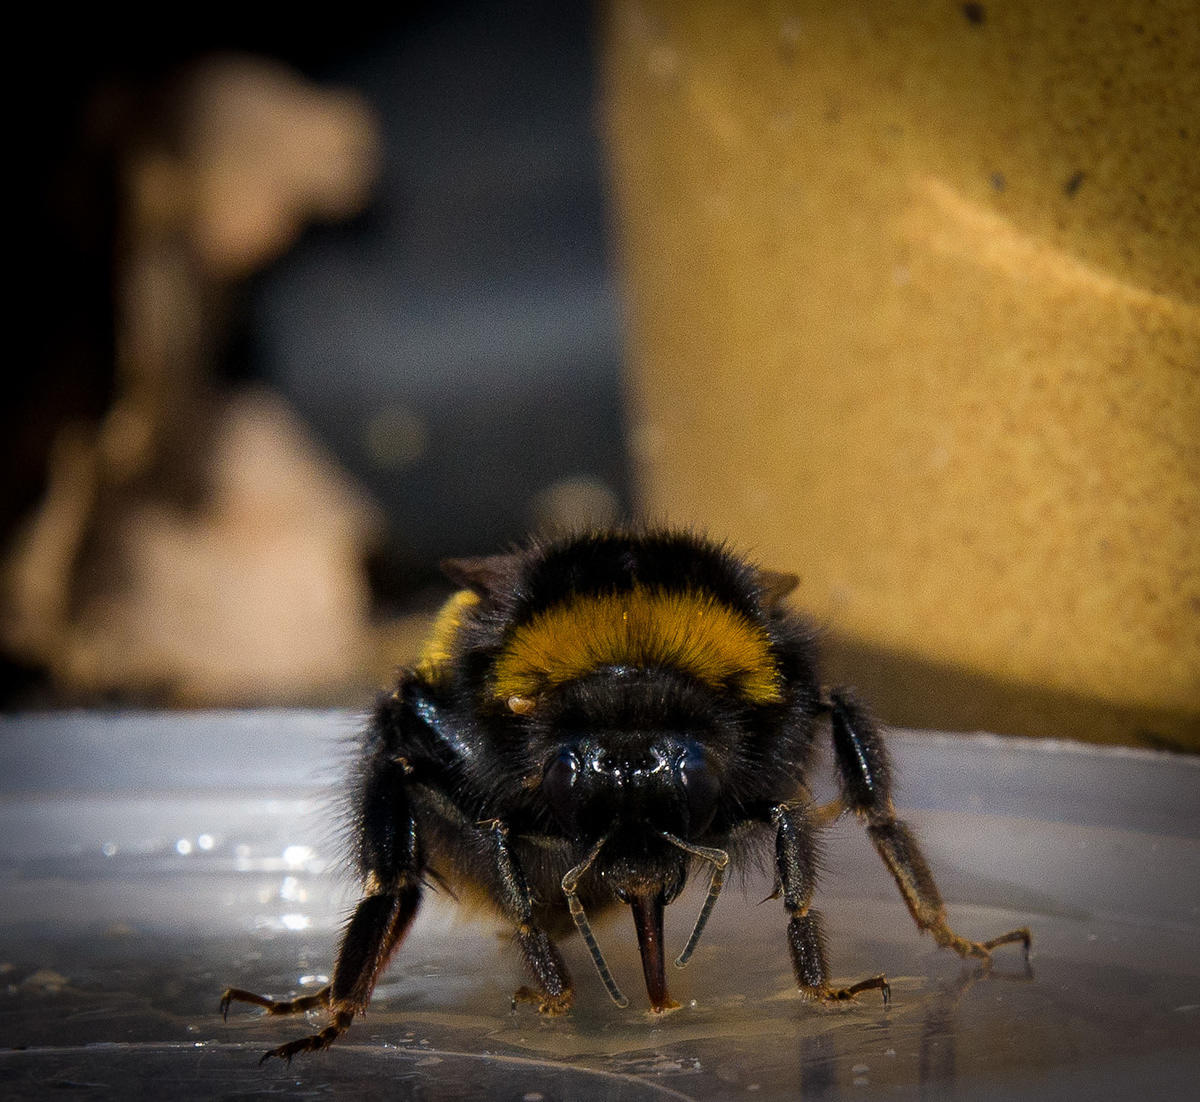 Feeding my bae bee some honey water. #bombus